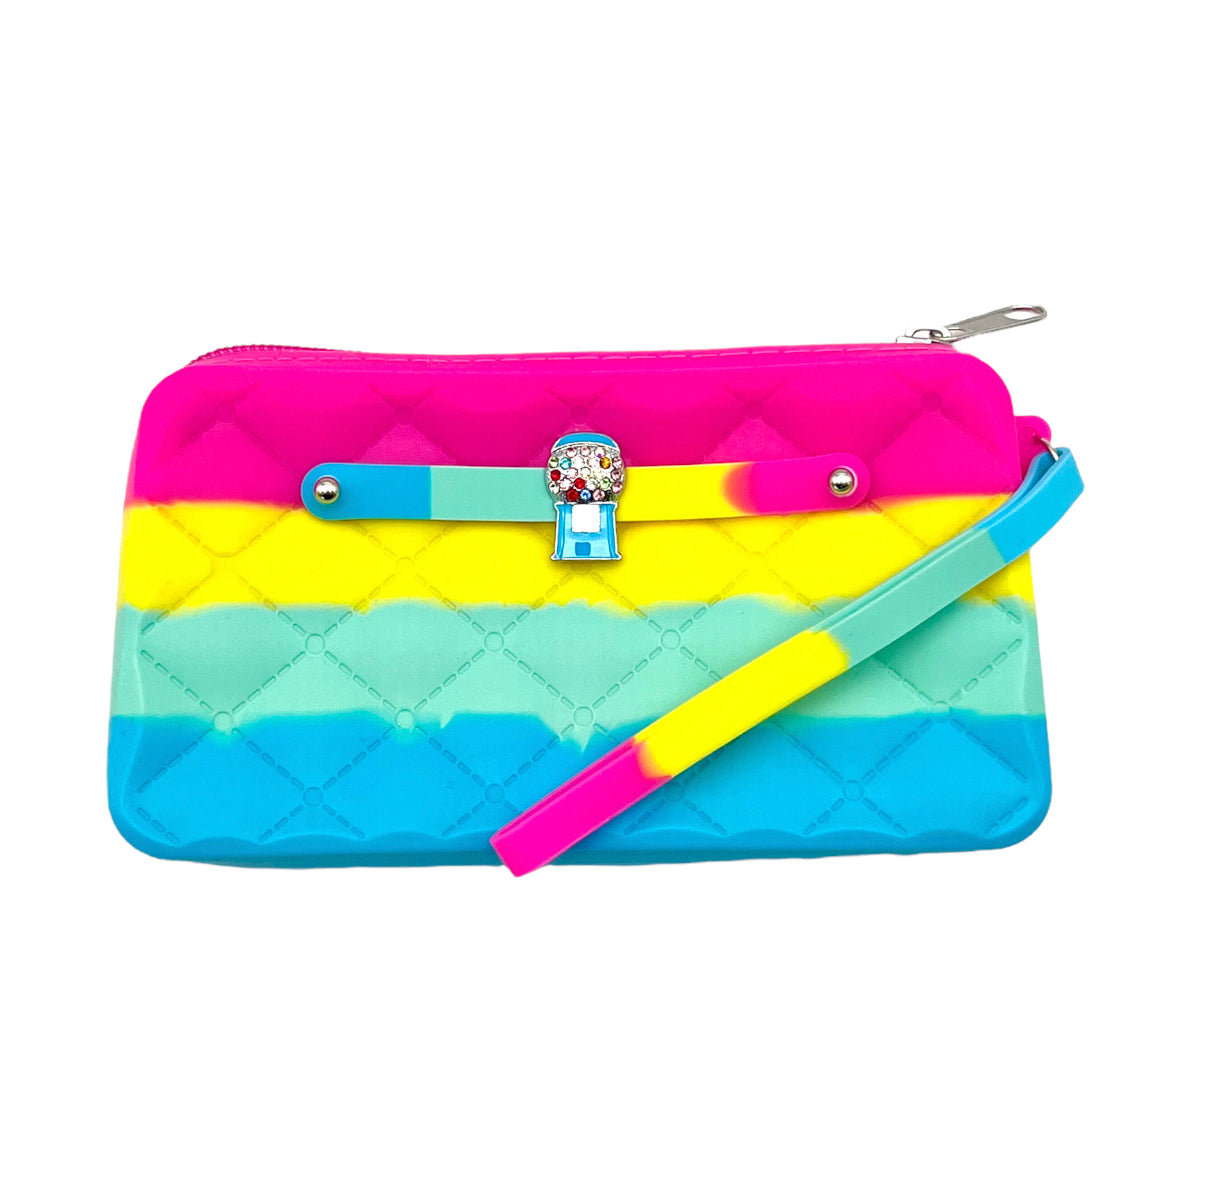 Jelly Rainbow Purse Summer Beach Tote Bag, Transparent Large Handle  Shoulder Handbag on Galleon Philippines